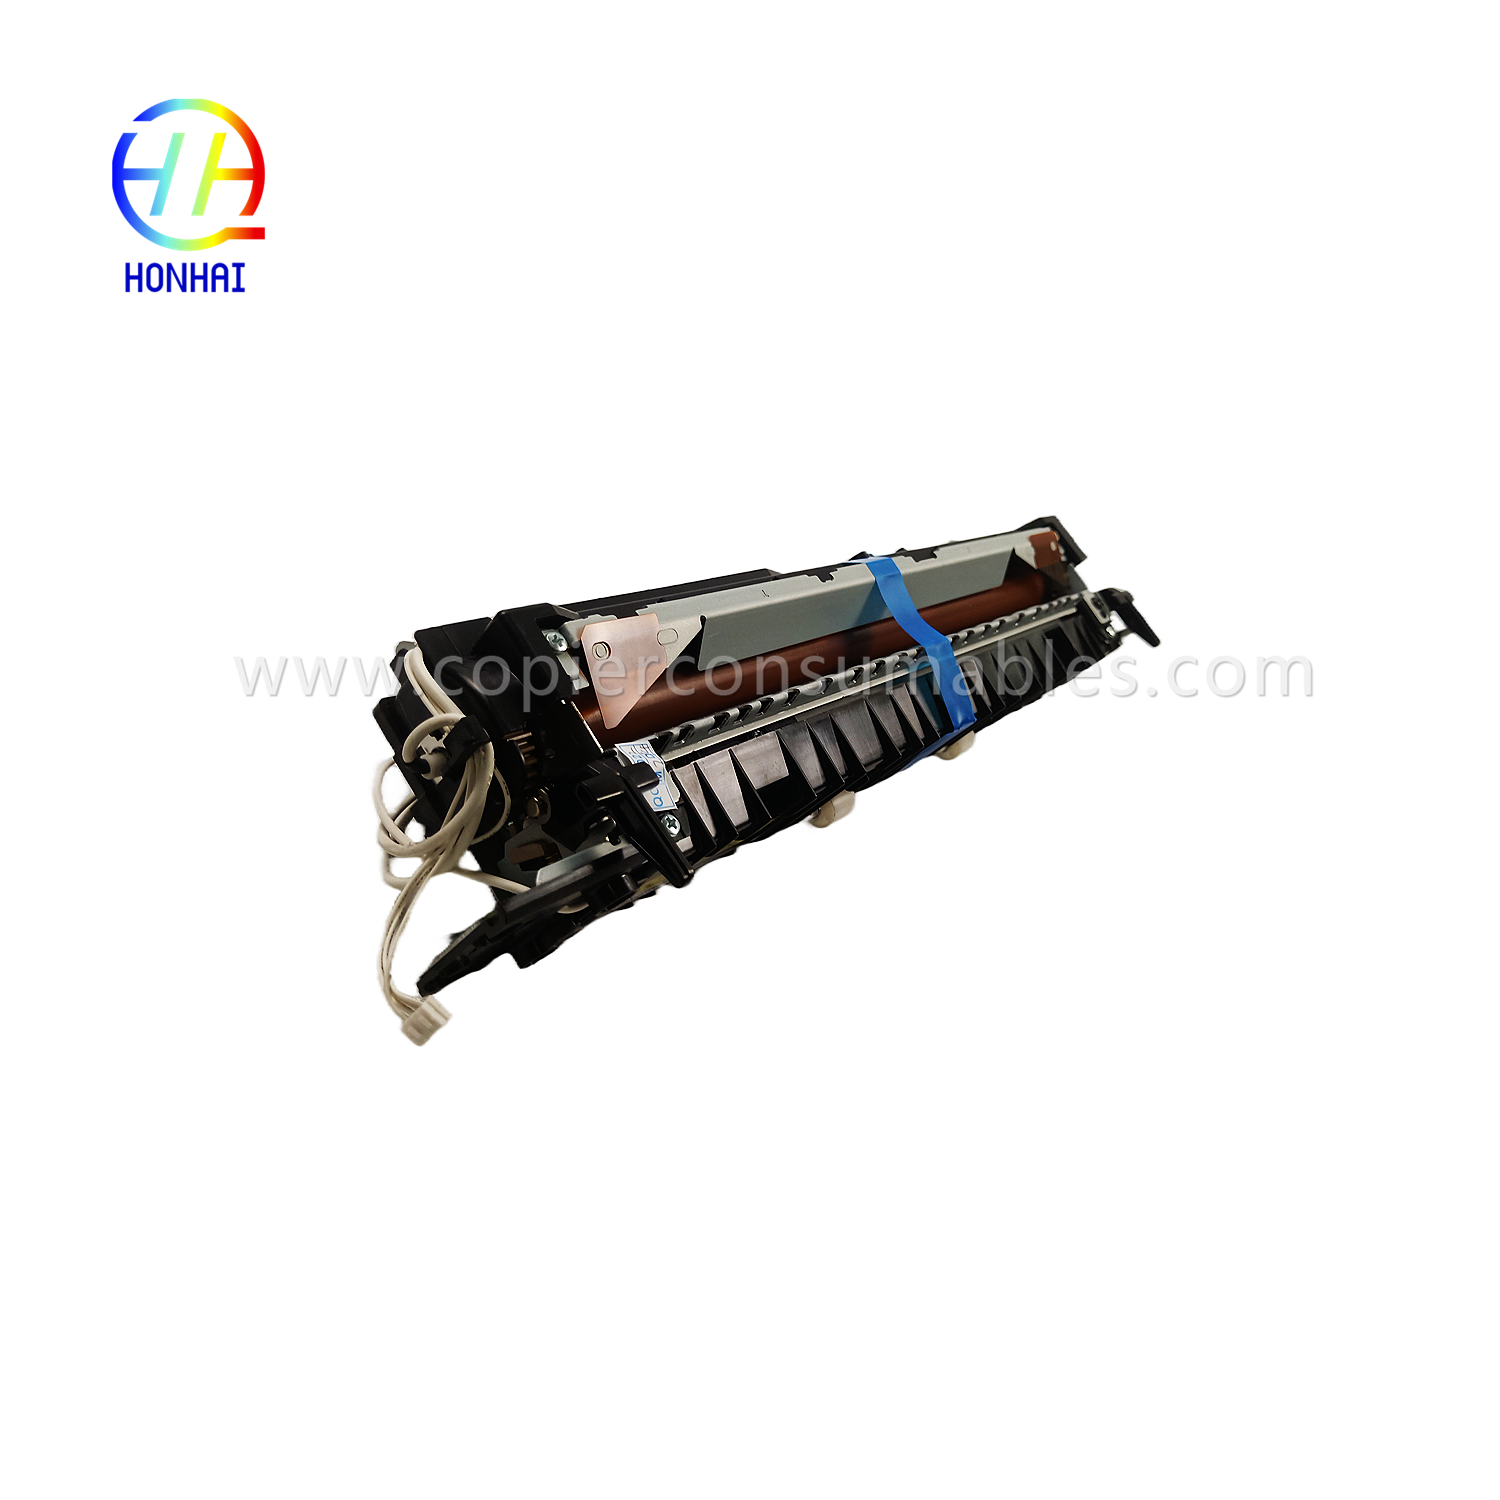 https://www.copierconsumables.com/fuser-heating-unit-for-samsung-jc91-01152a-sl-k2200nd-fuser-unit-product/